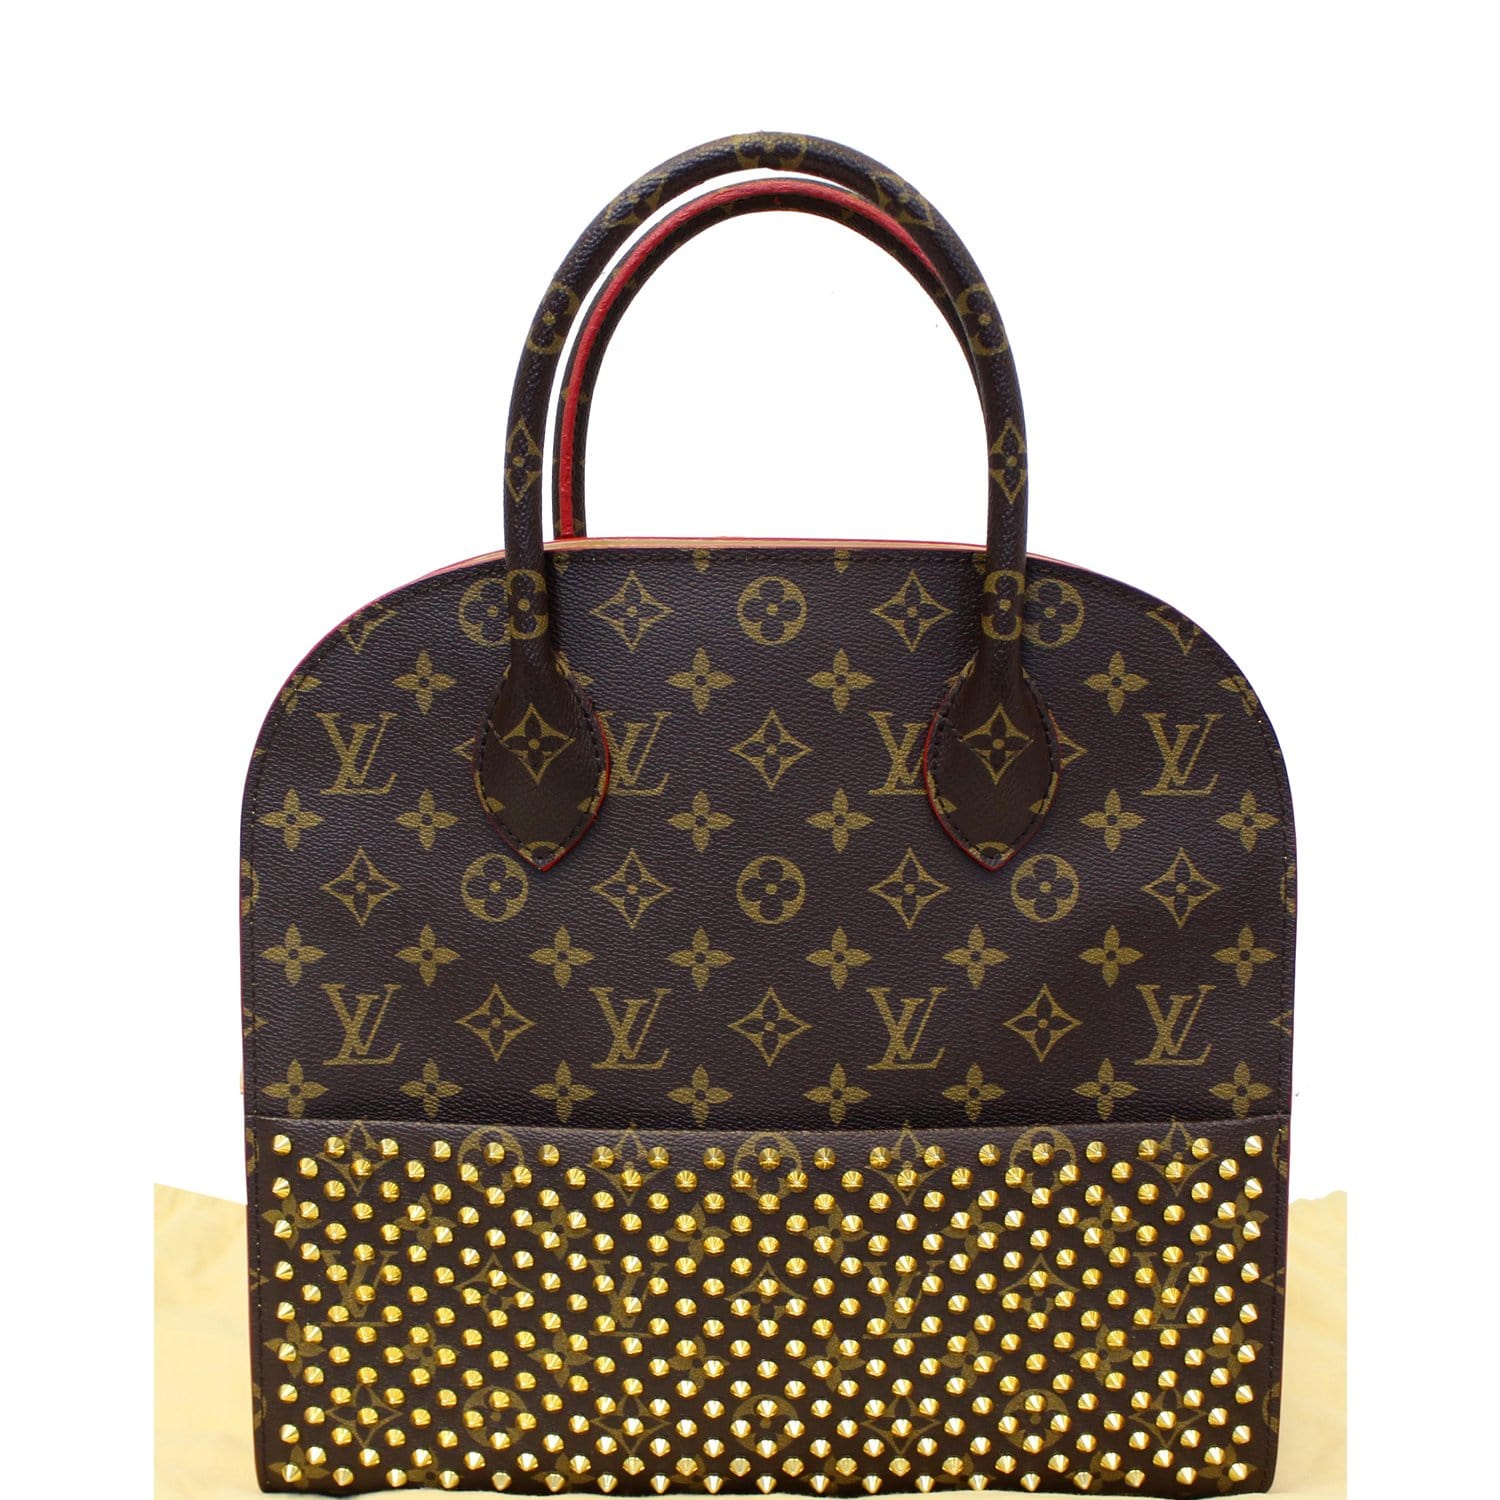 ICONS!!! #LouisVuitton monogrammed Speedy #handbag and #ChristianLouboutin  black #pumps